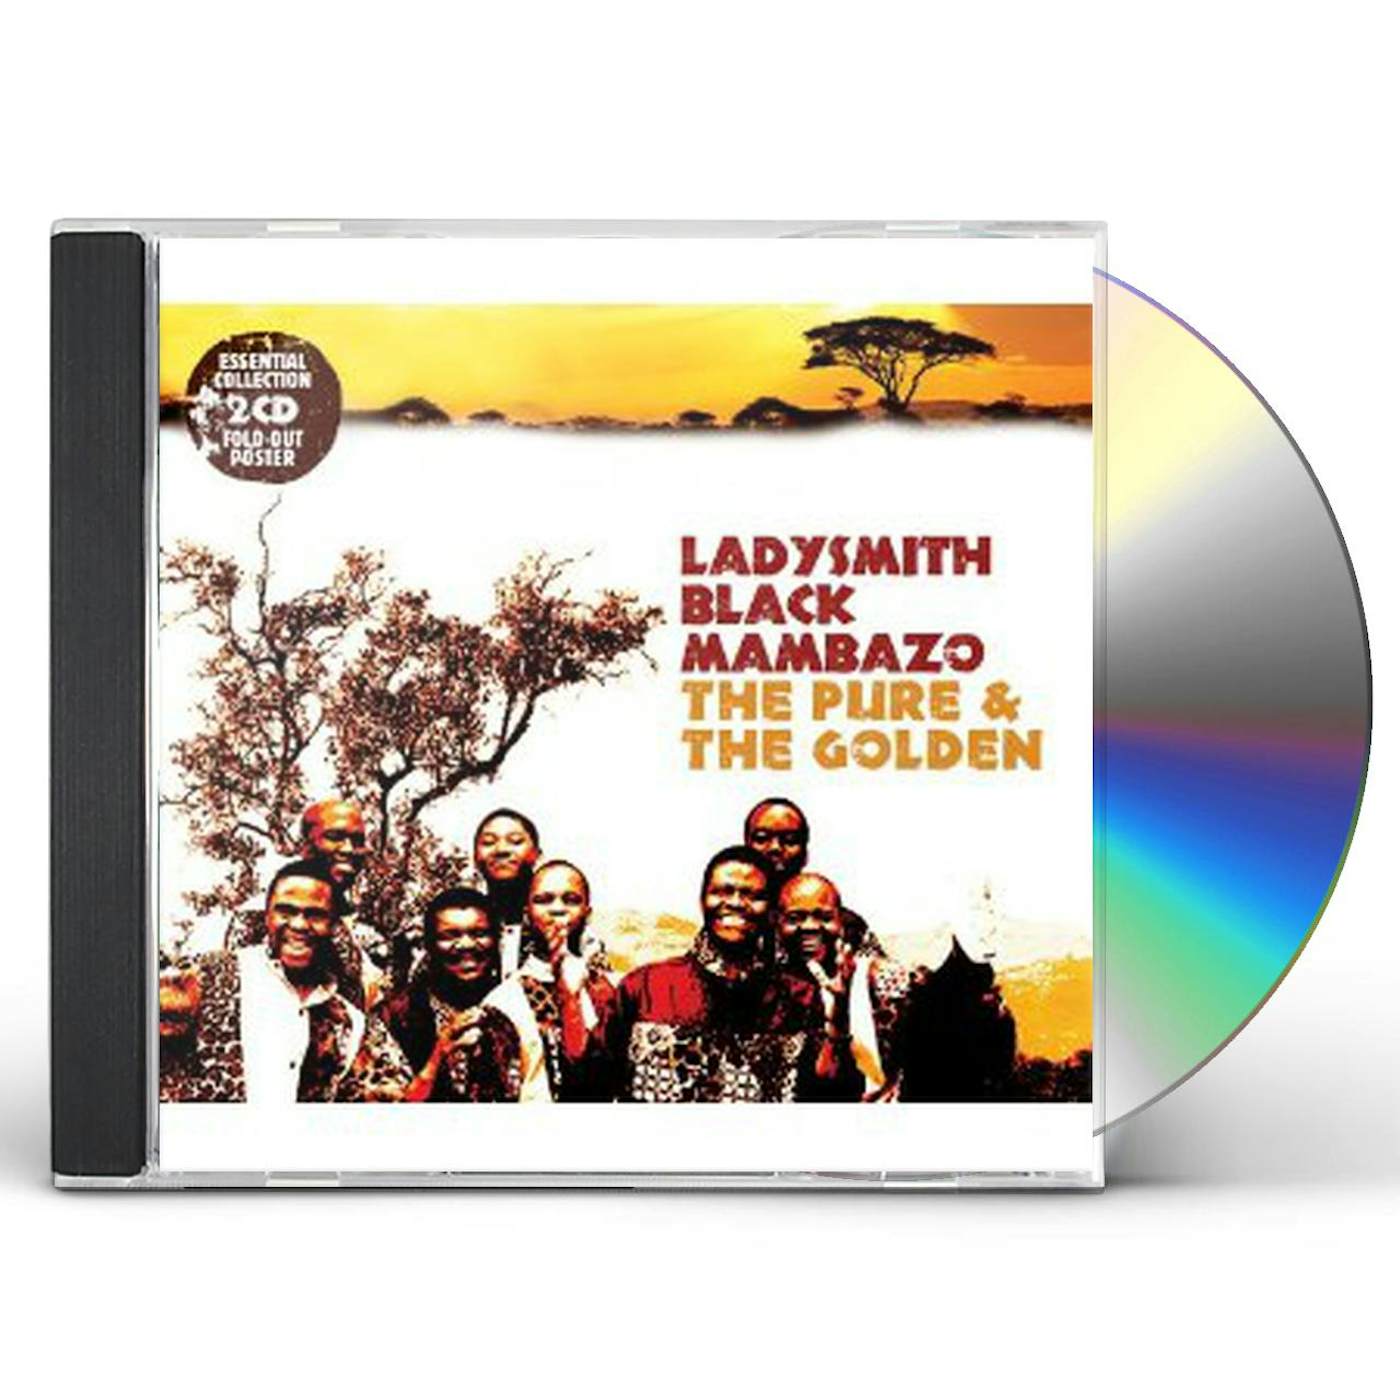 Ladysmith Black Mambazo PURE & THE GOLDEN CD